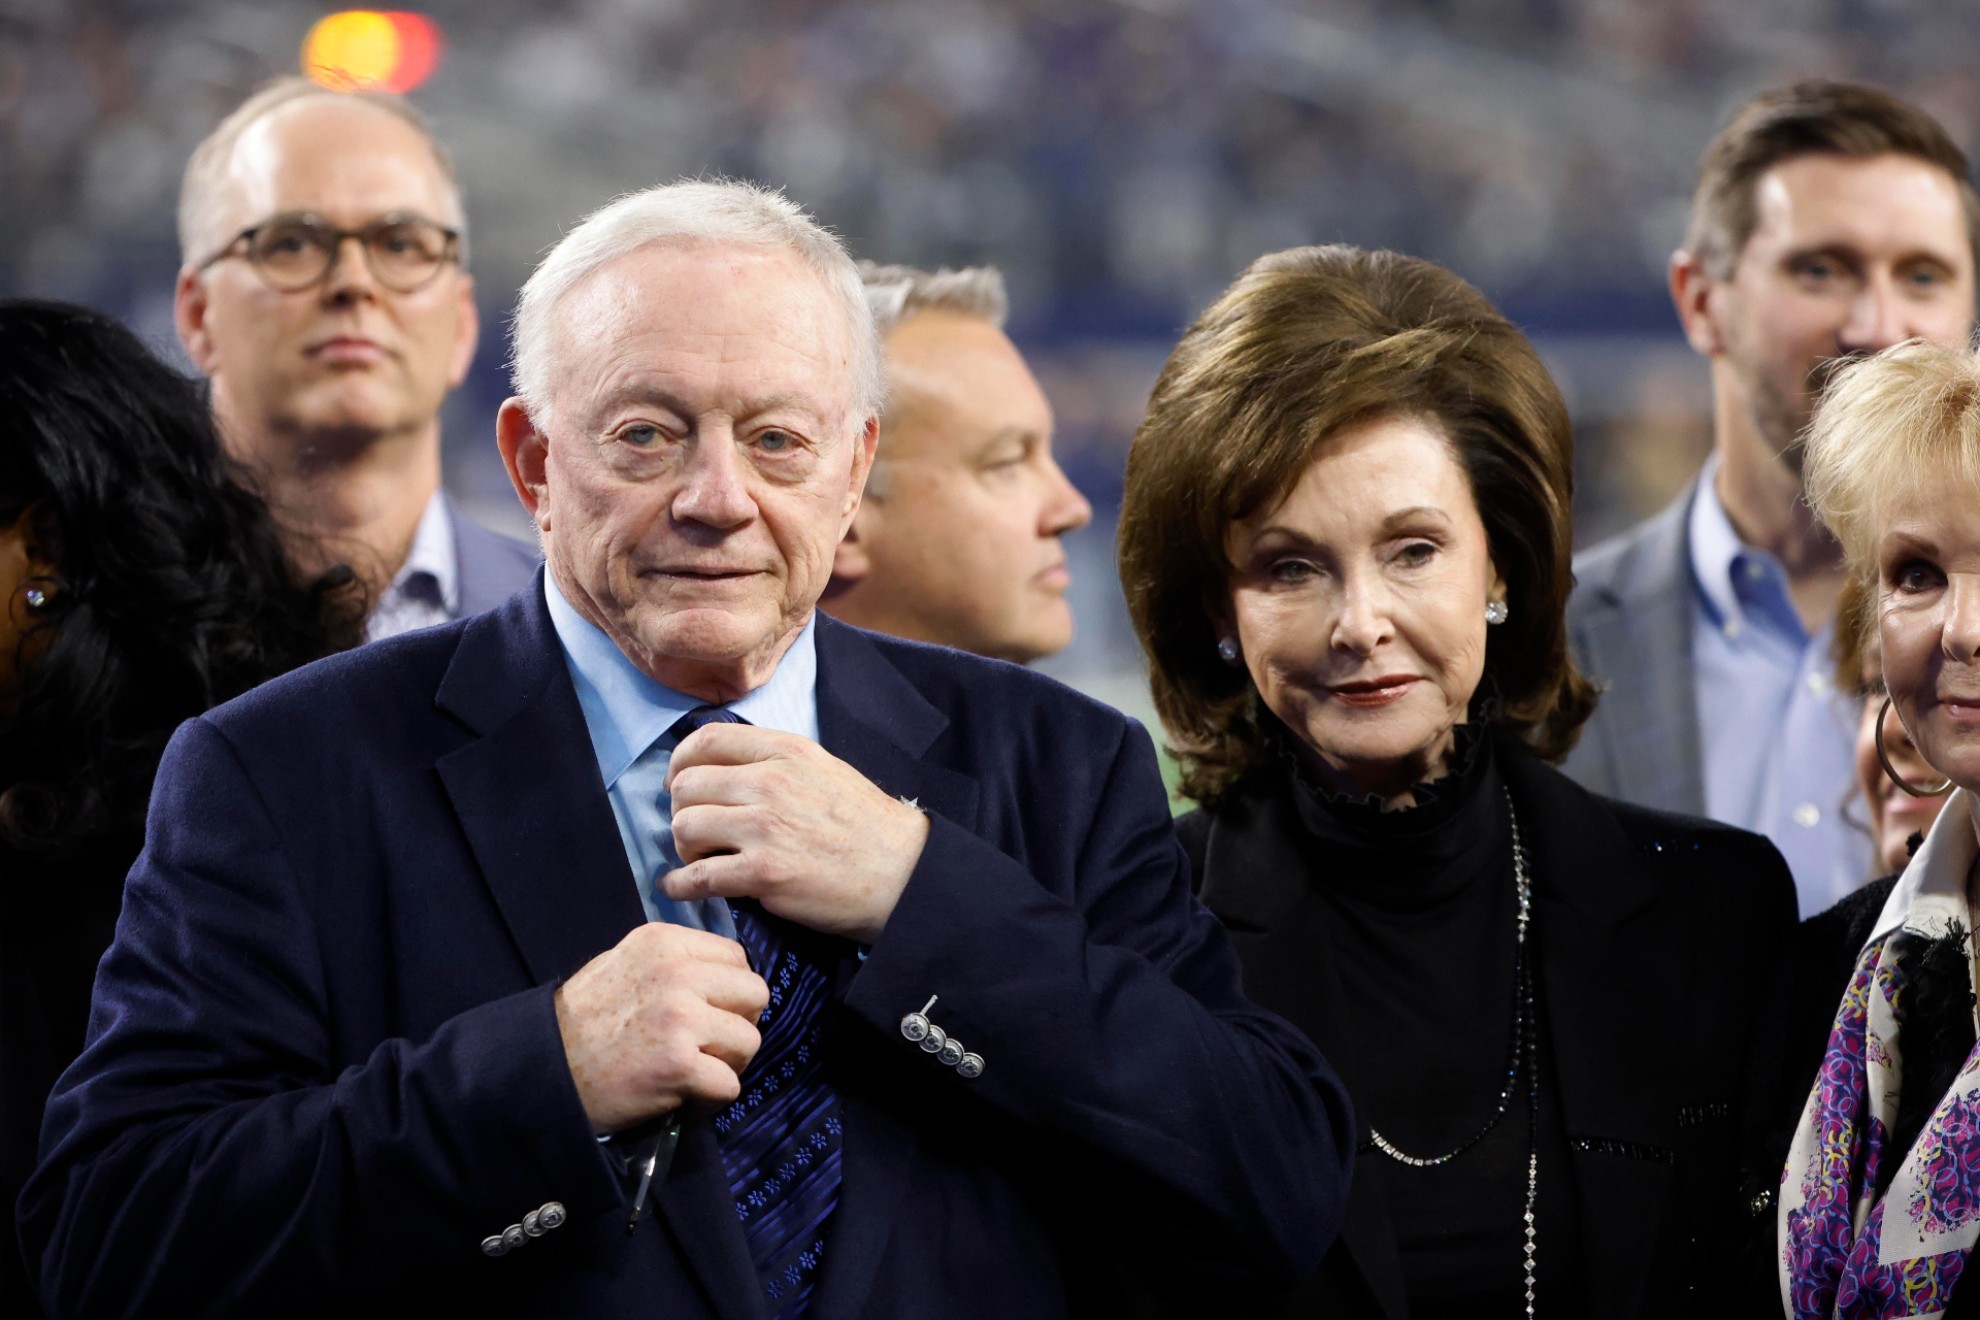 Dallas Cowboys owner Jerry Jones and his wife Gene Jones.